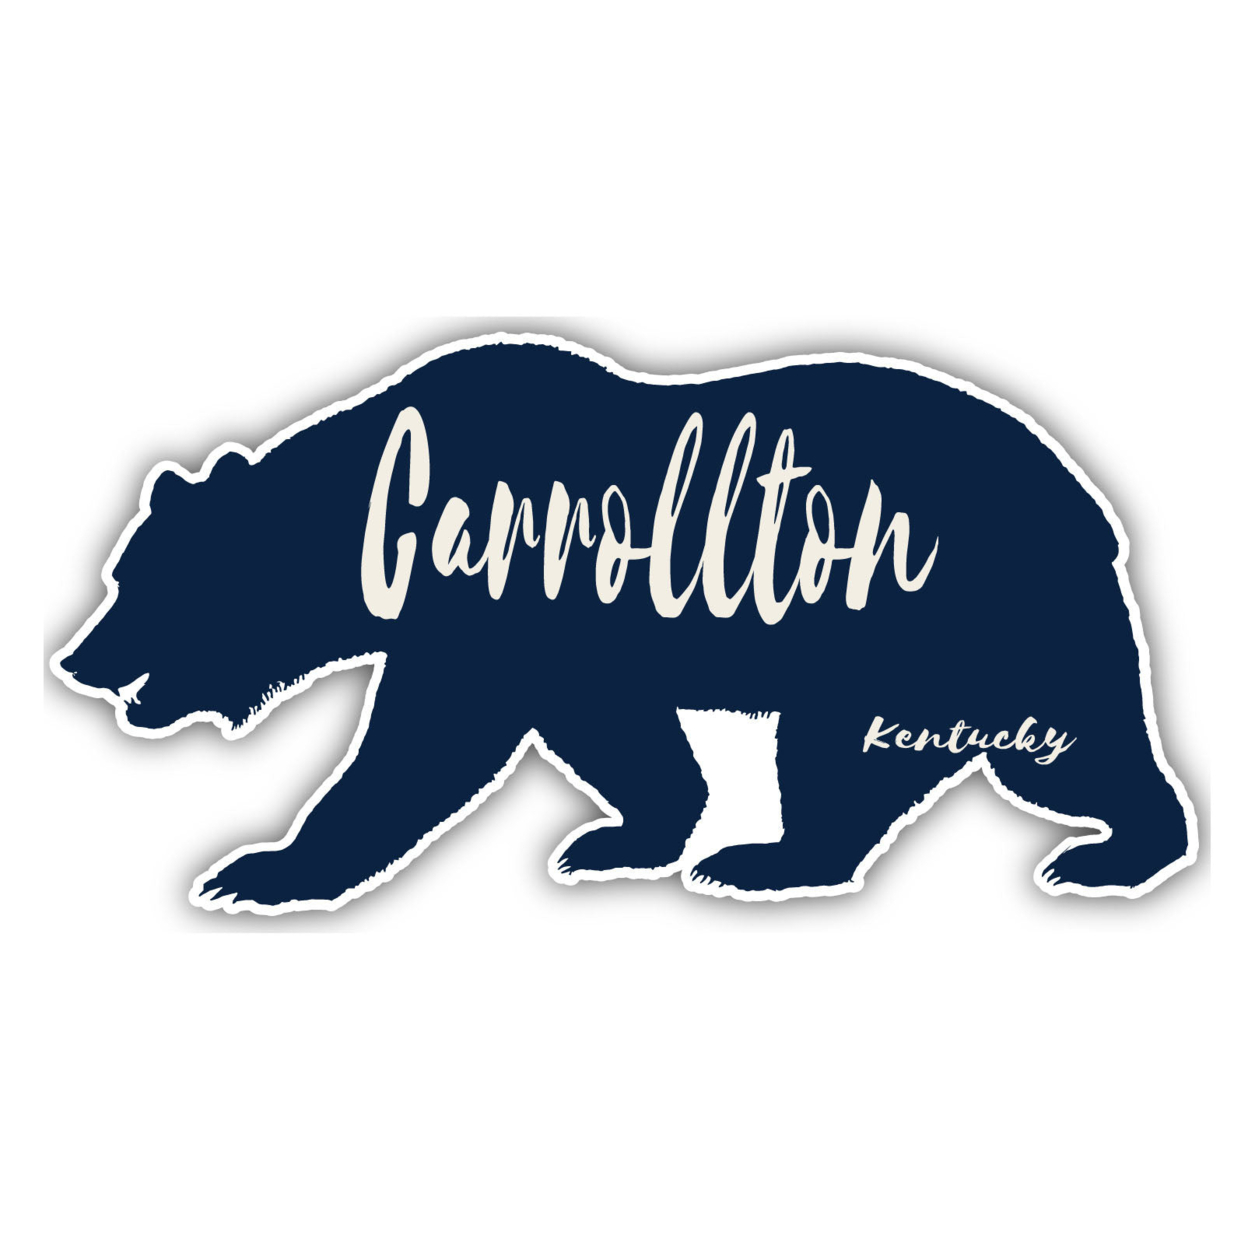 Carrollton Kentucky Souvenir Decorative Stickers (Choose Theme And Size) - Single Unit, 6-Inch, Bear